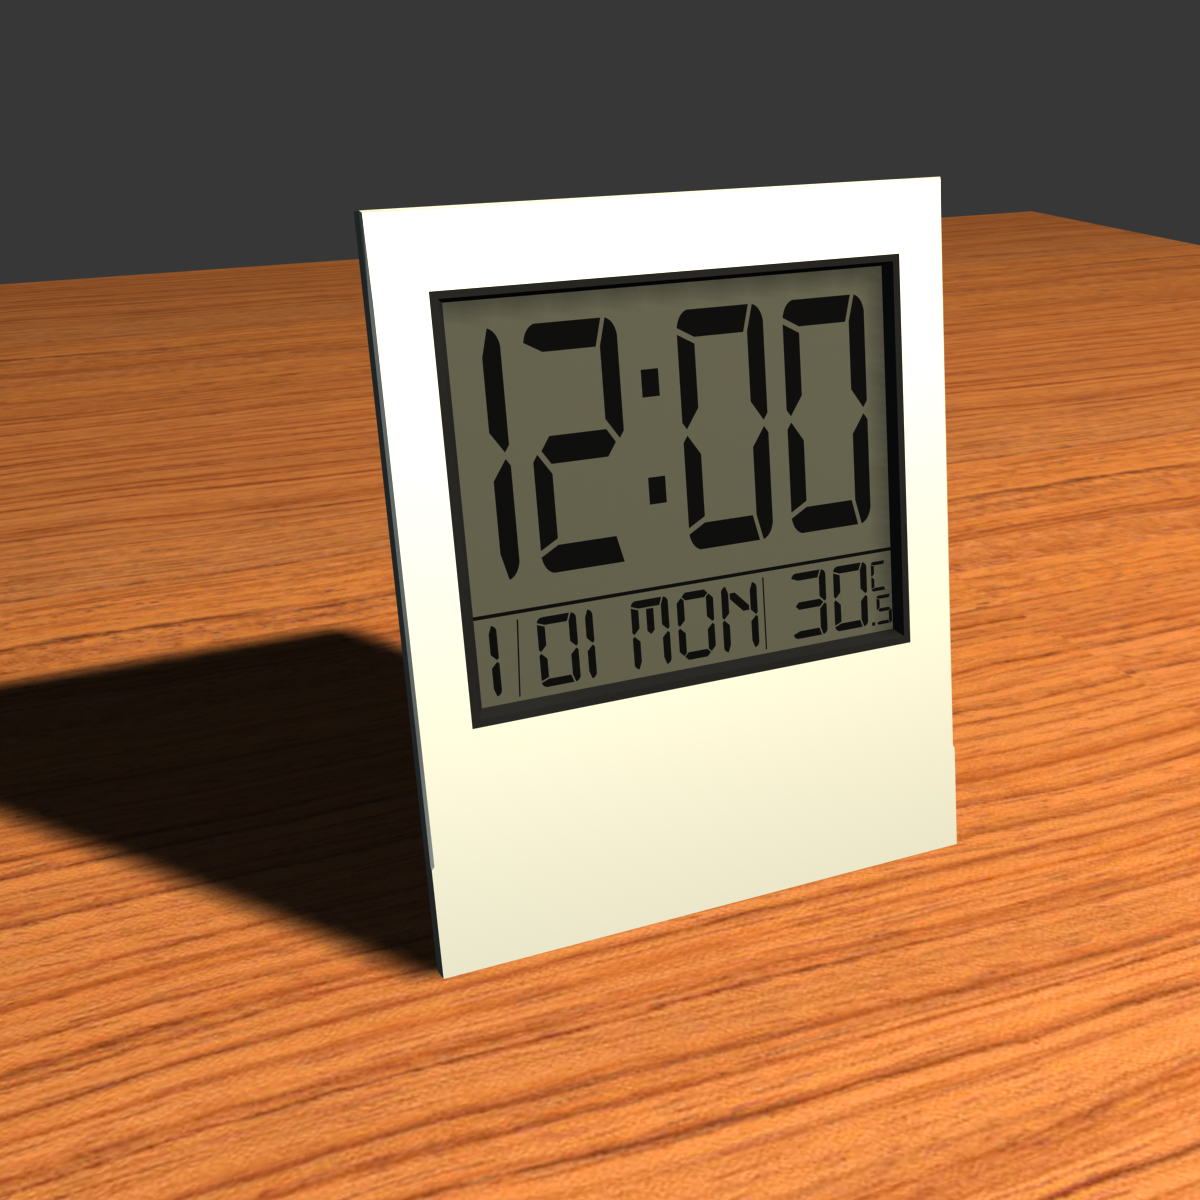 3d digital clock